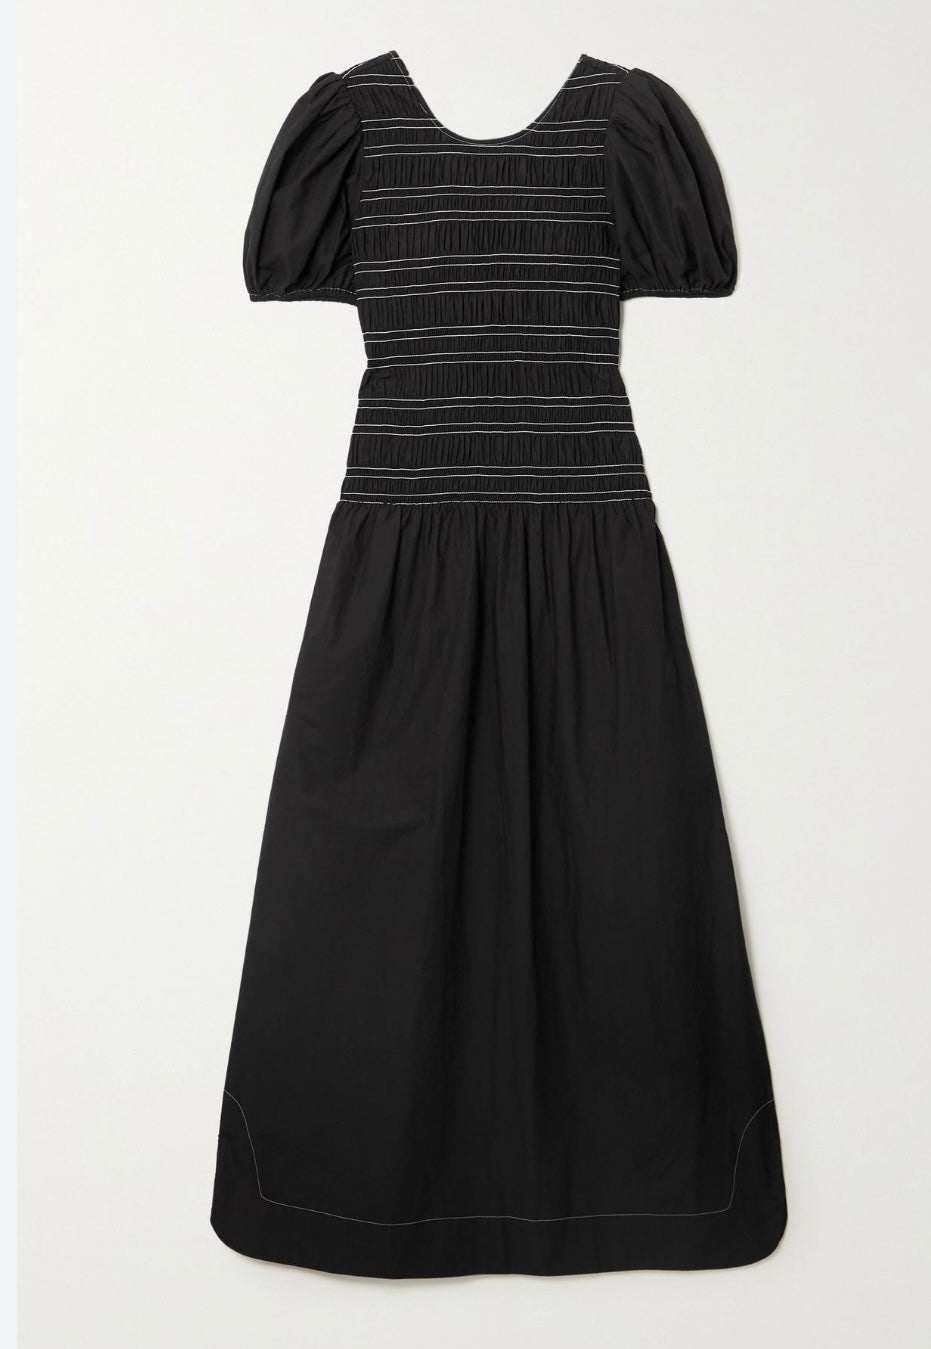 GANNI
Shirred cotton-poplin midi dress